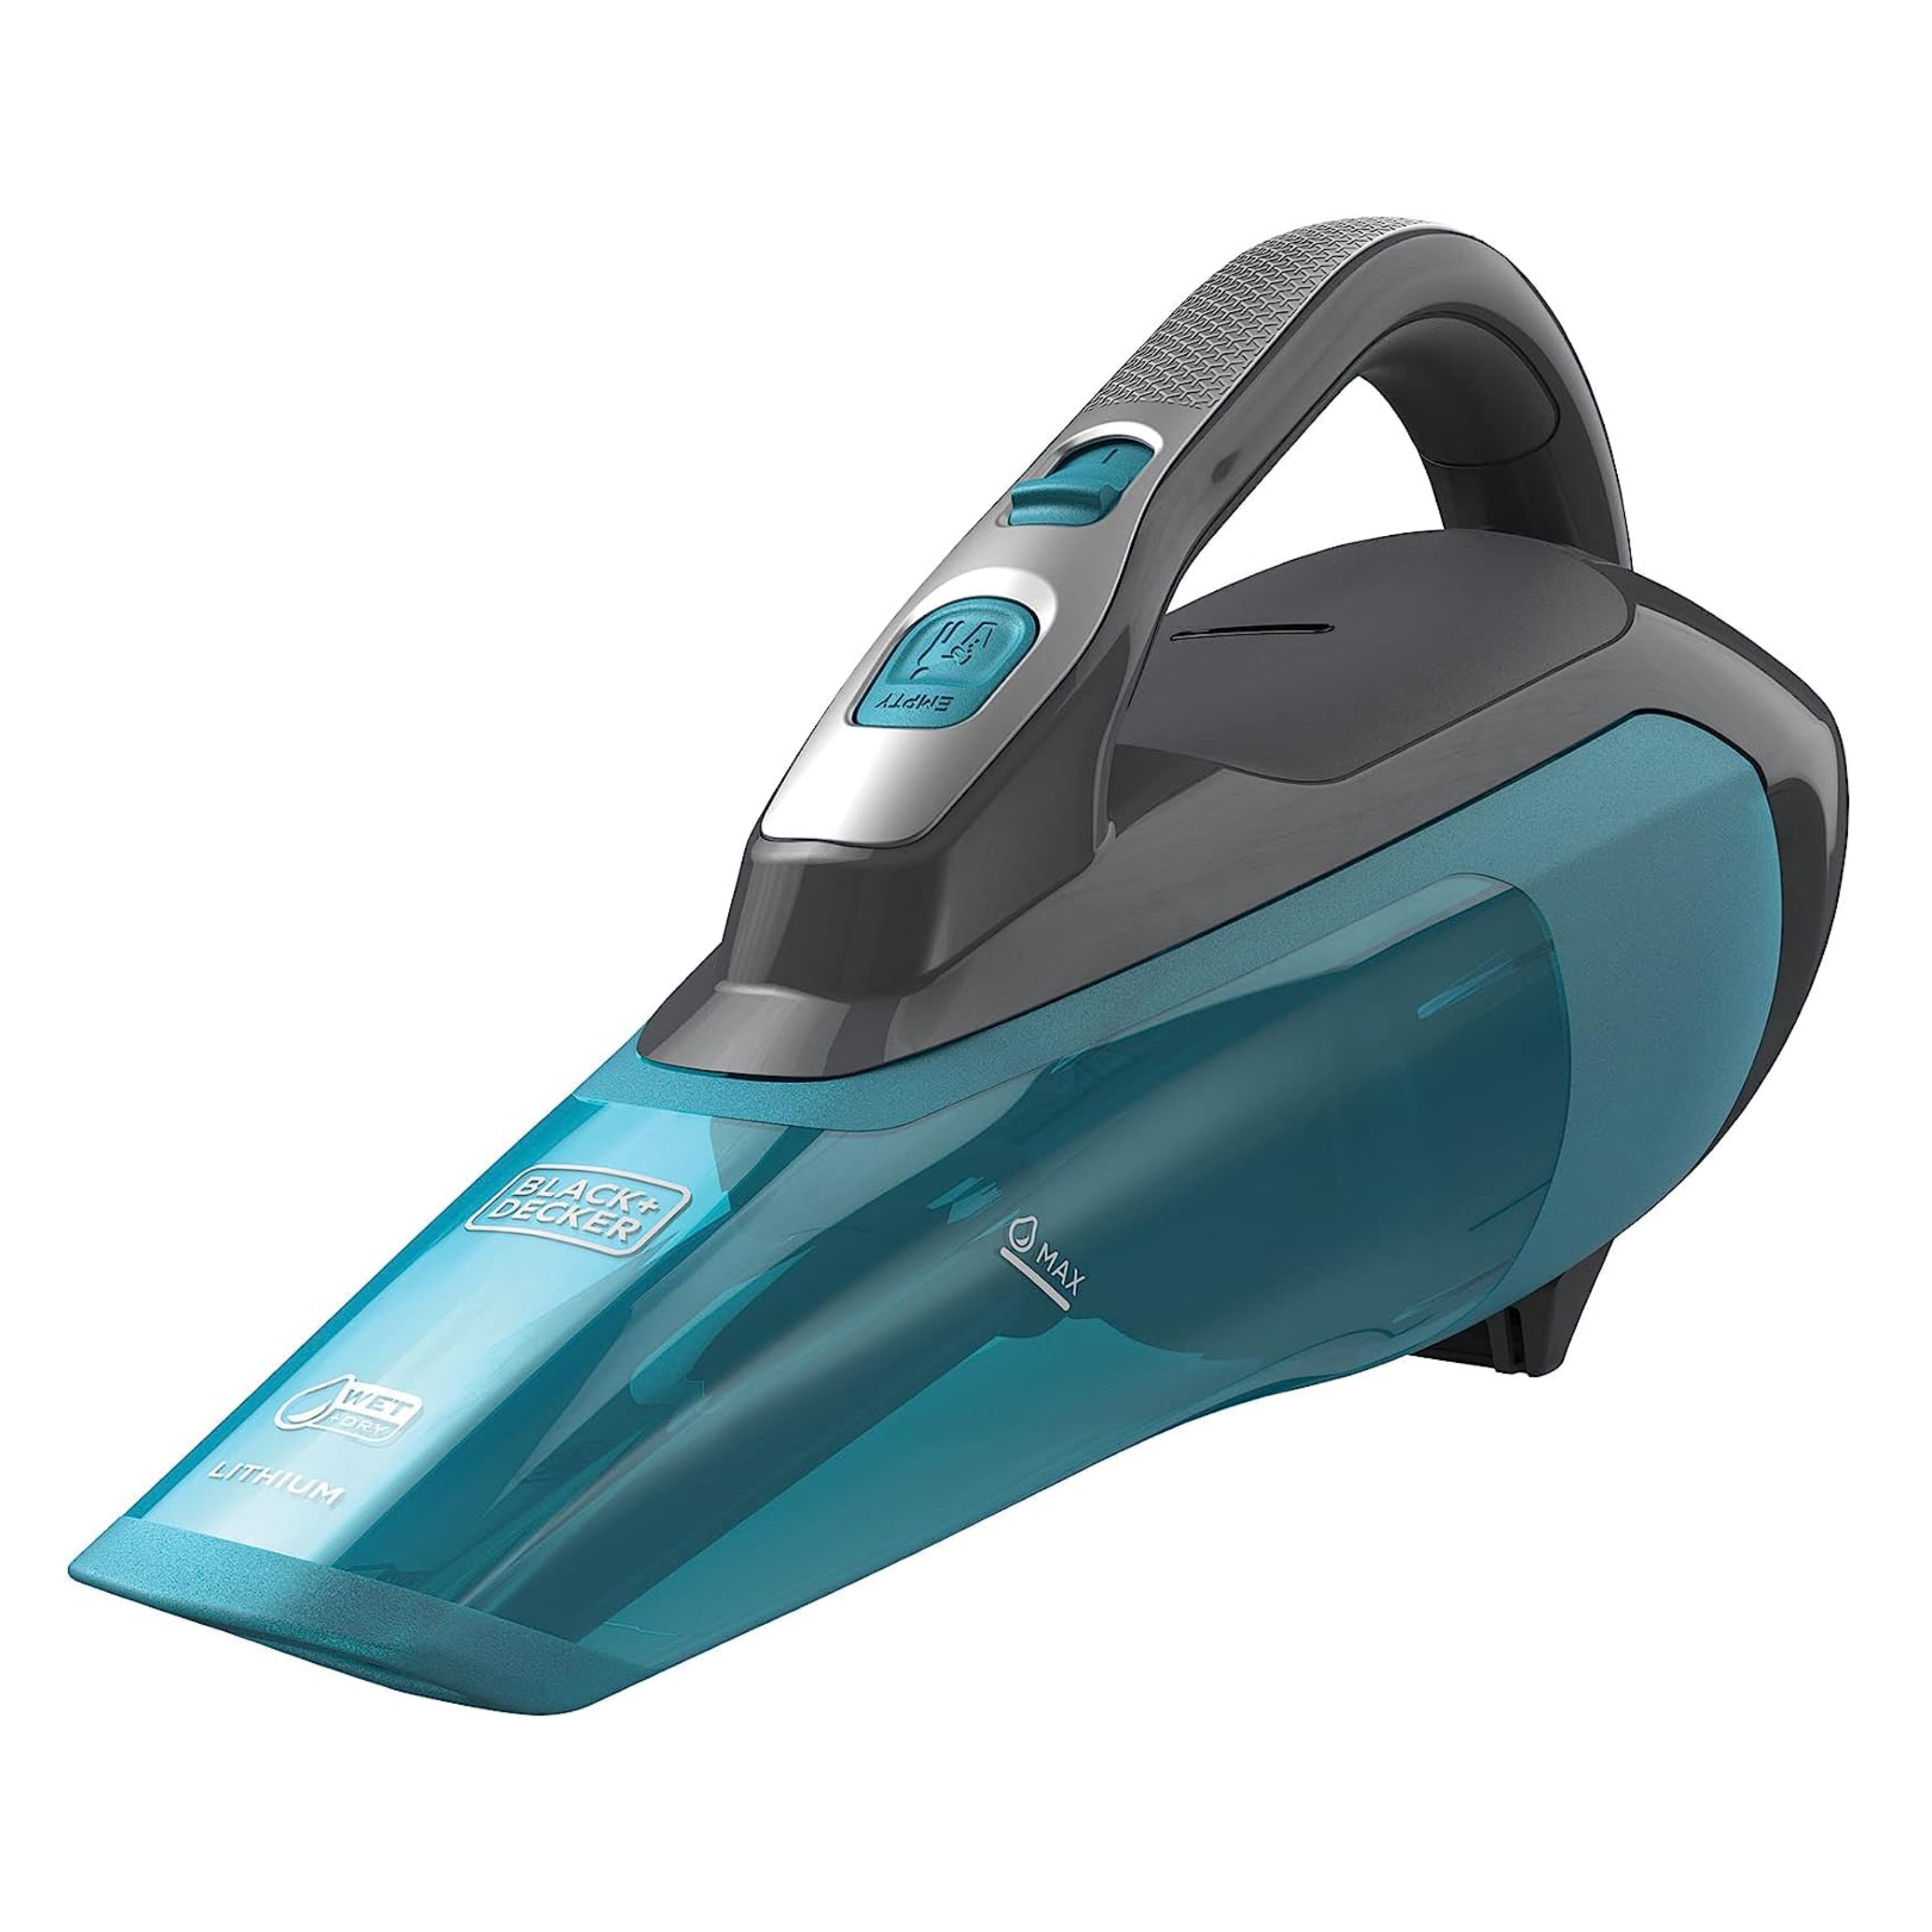 Black and Decker Dustbuster AdvancedClean Cordless Wet/Dry Handheld Vacuum